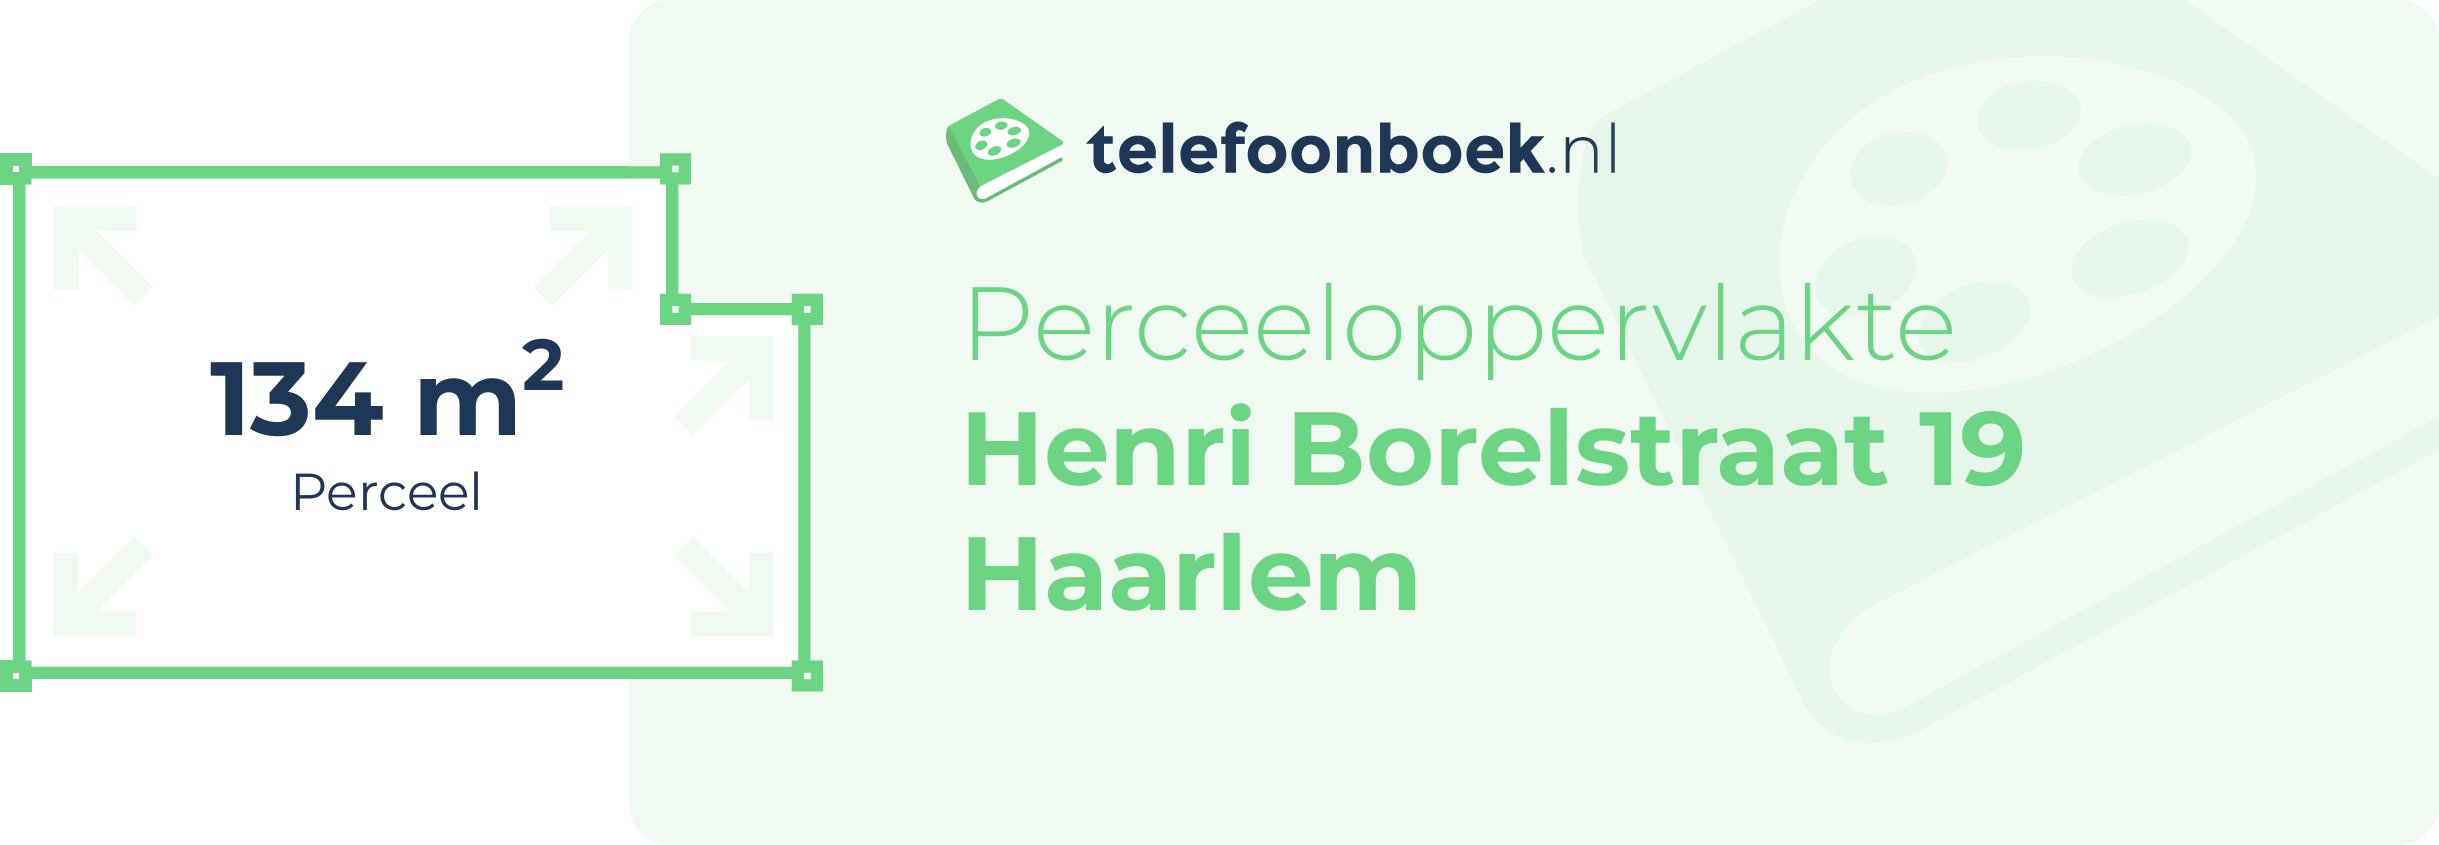 Perceeloppervlakte Henri Borelstraat 19 Haarlem